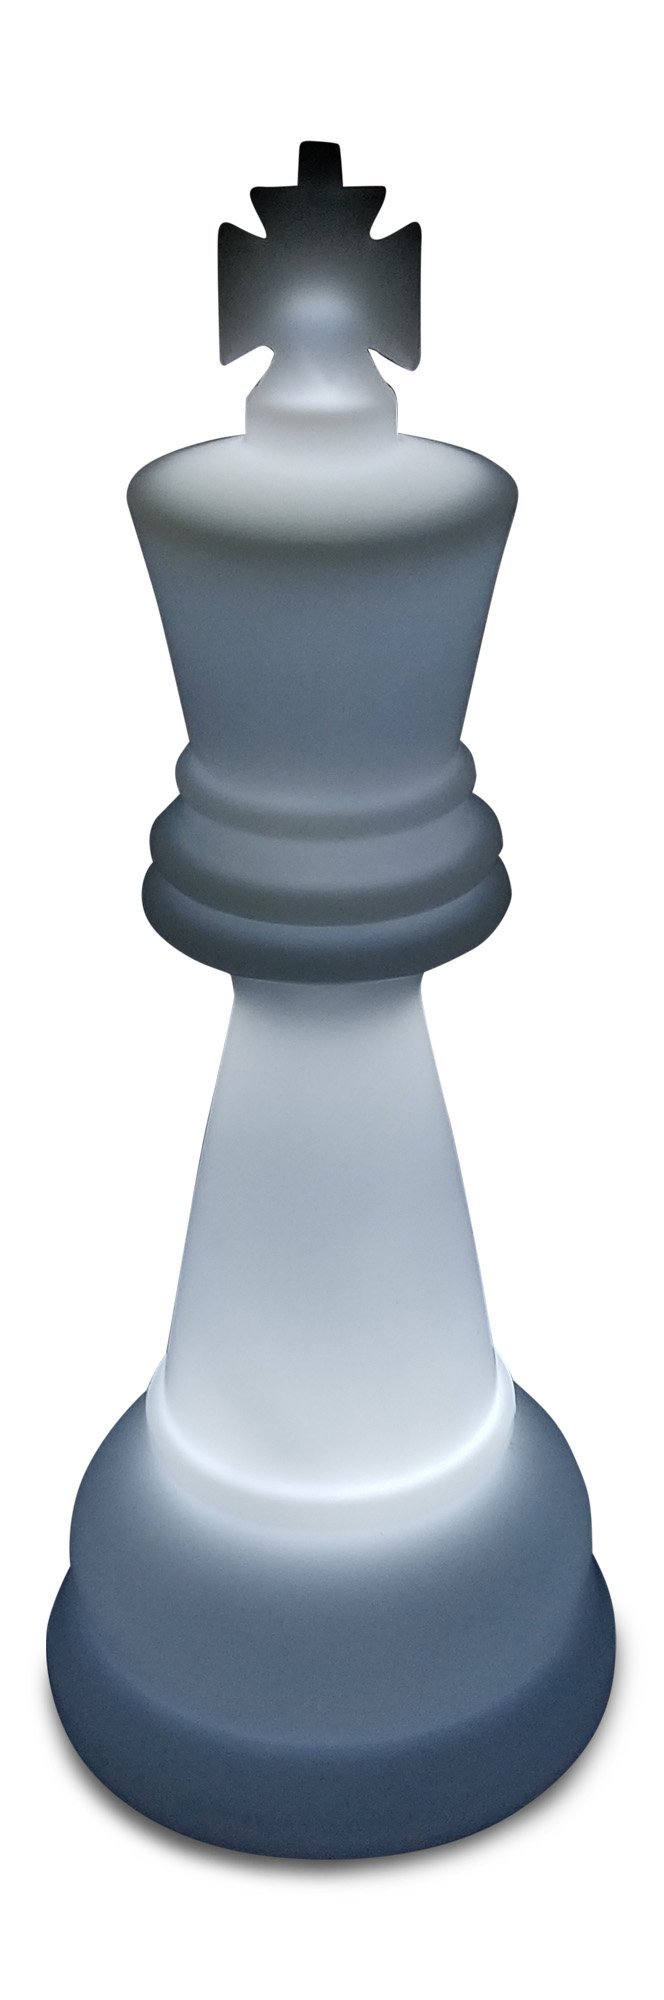 MegaChess -48-Inch White Light Up King Chess Piece |  | MegaChess.com